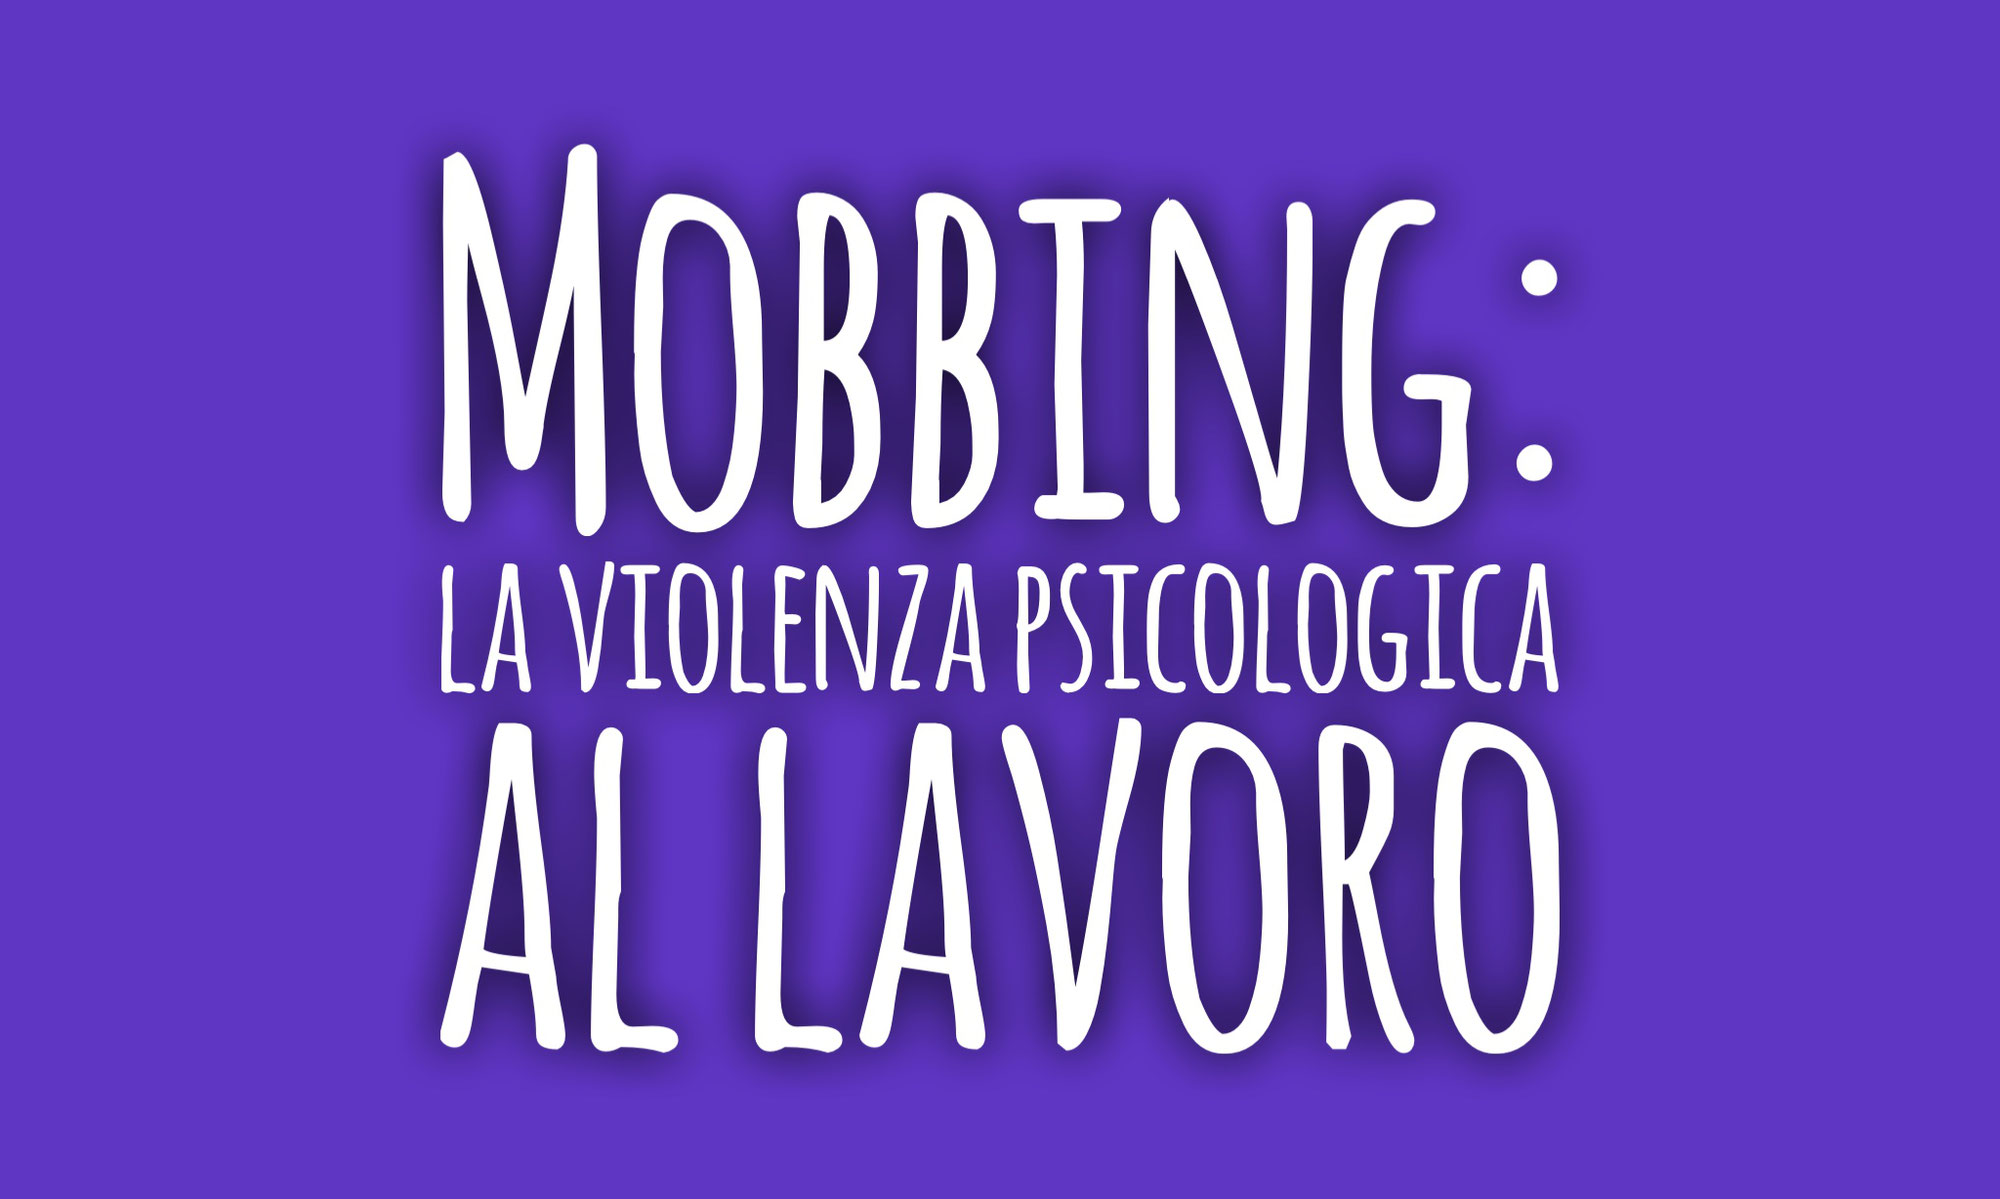 Mobbing: la violenza psicologica al lavoro